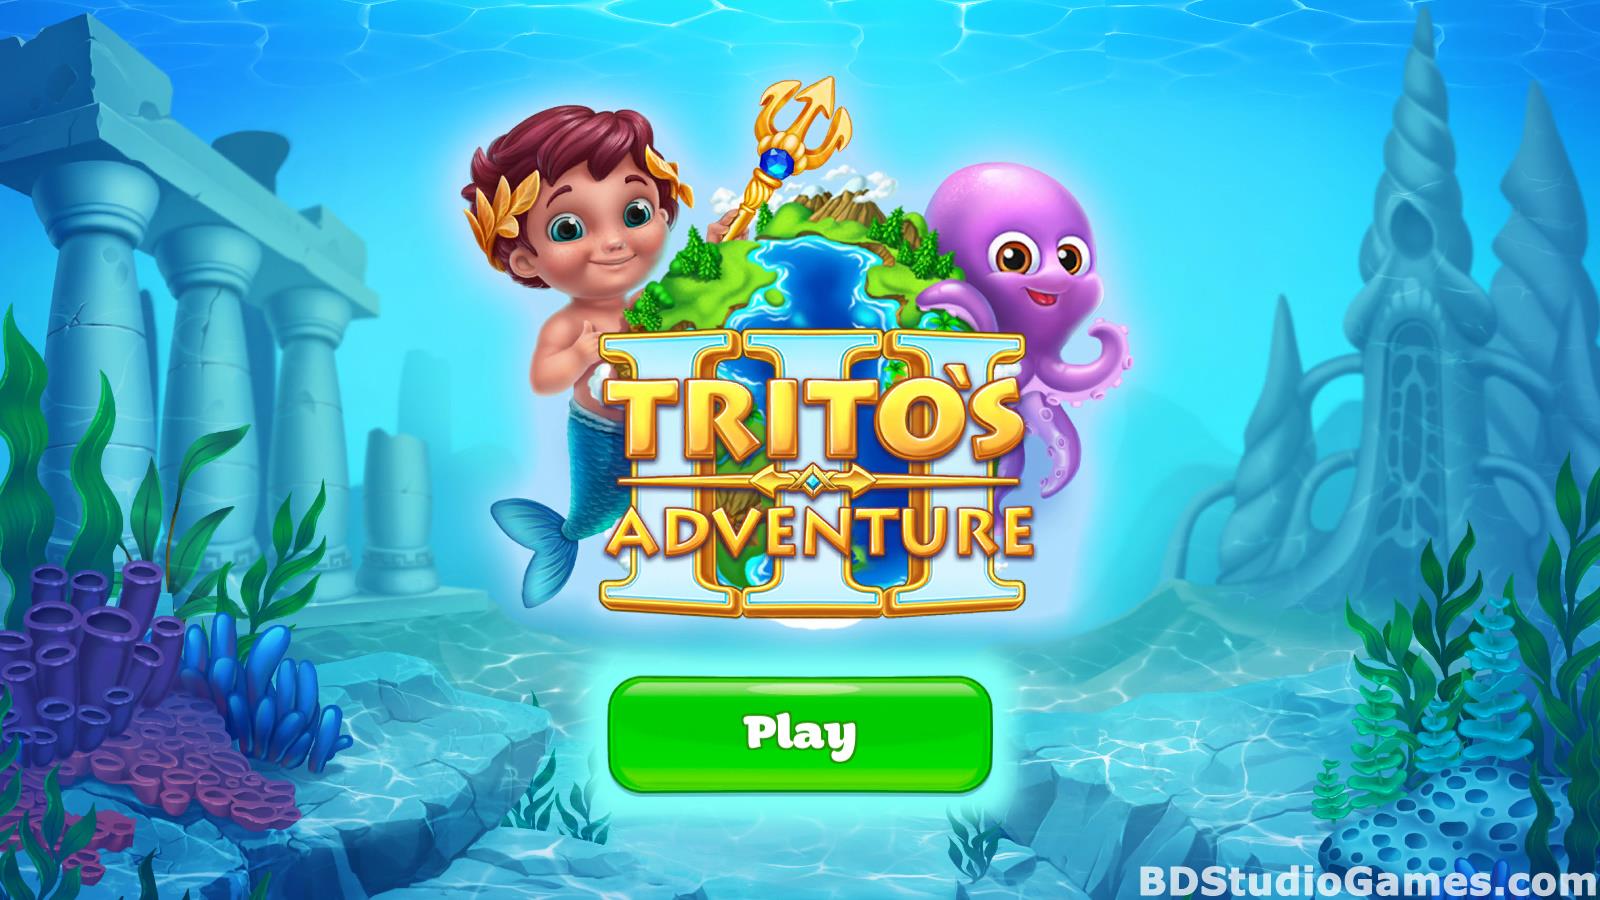 Trito's Adventure III Free Download Screenshots 05